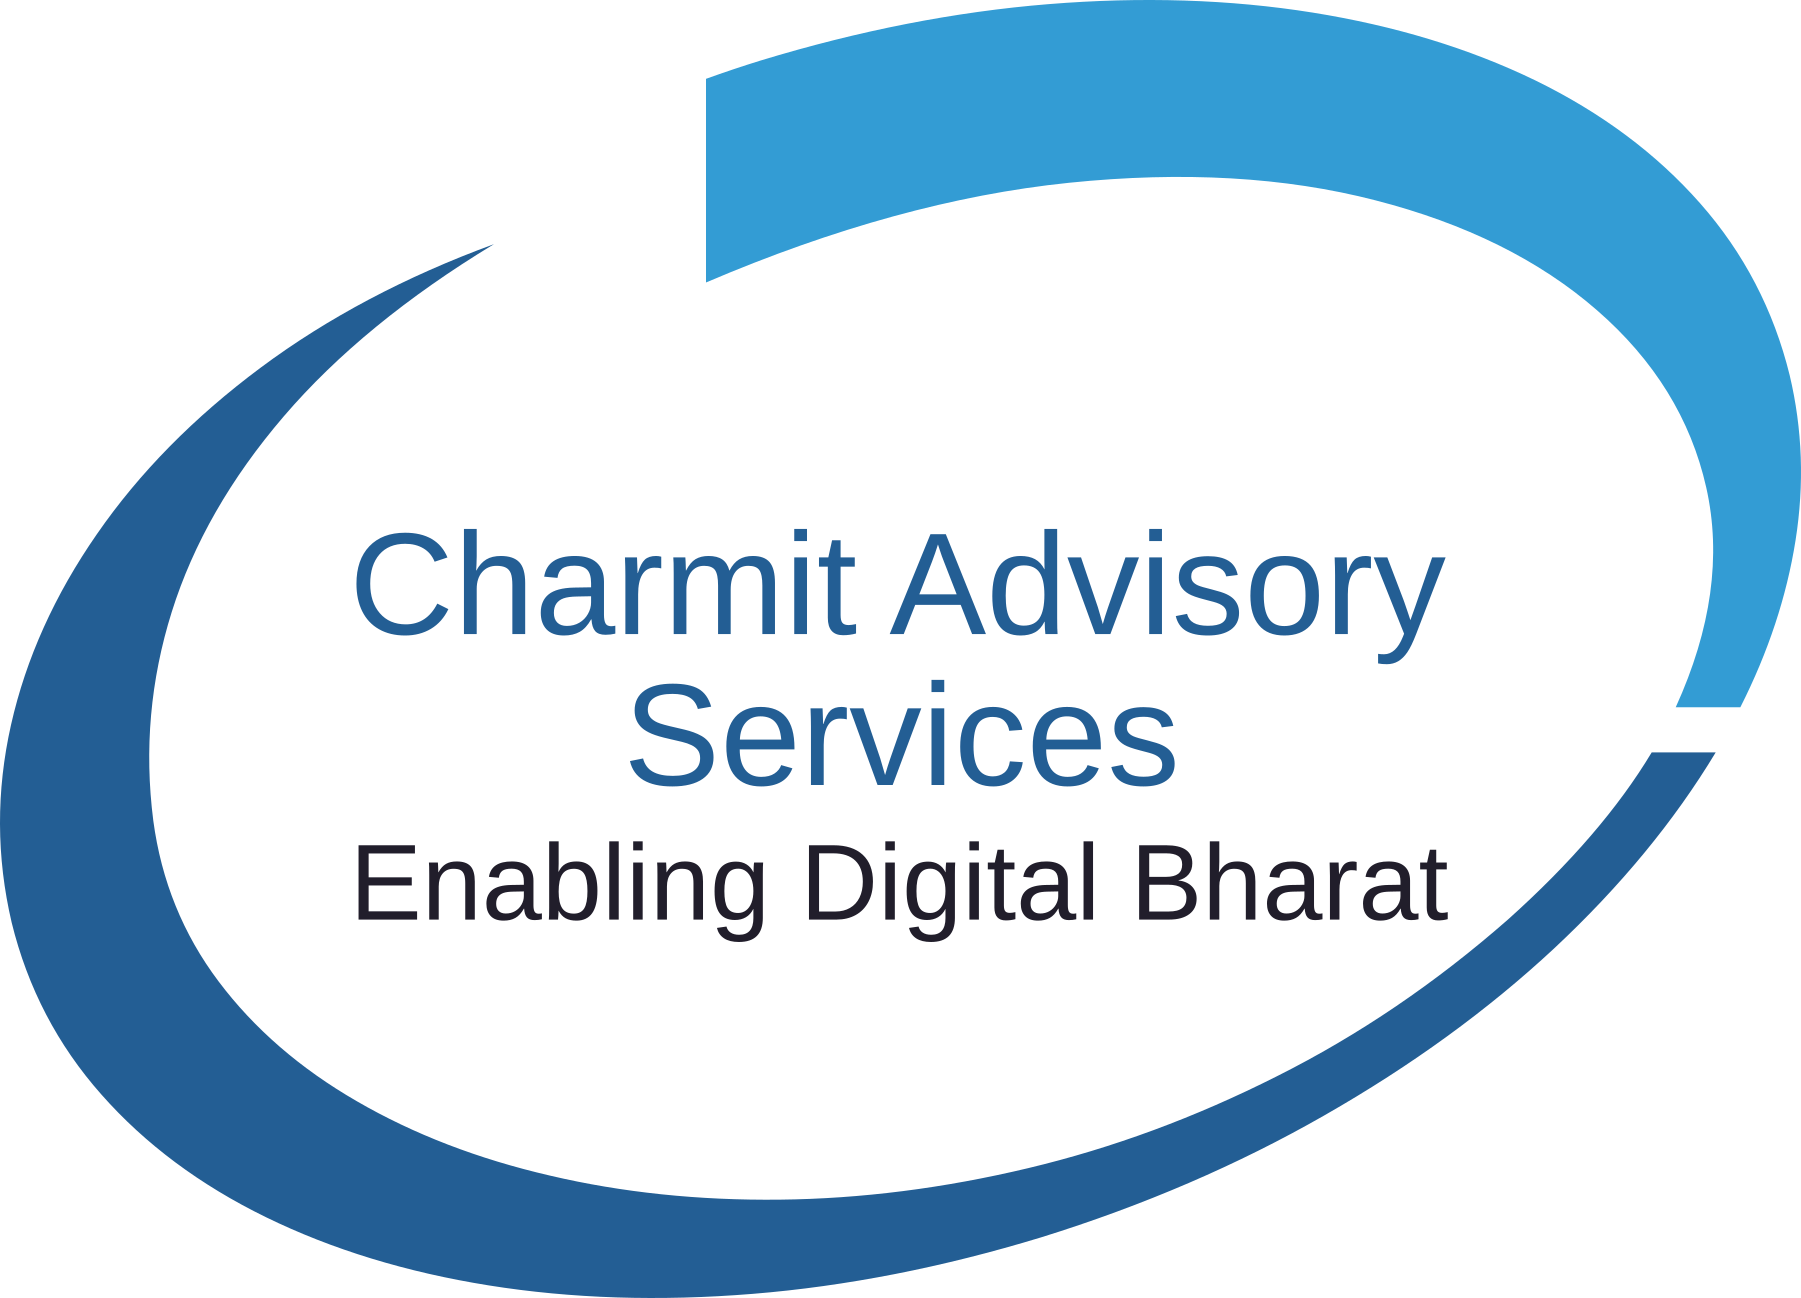 Charmit Advisory Services